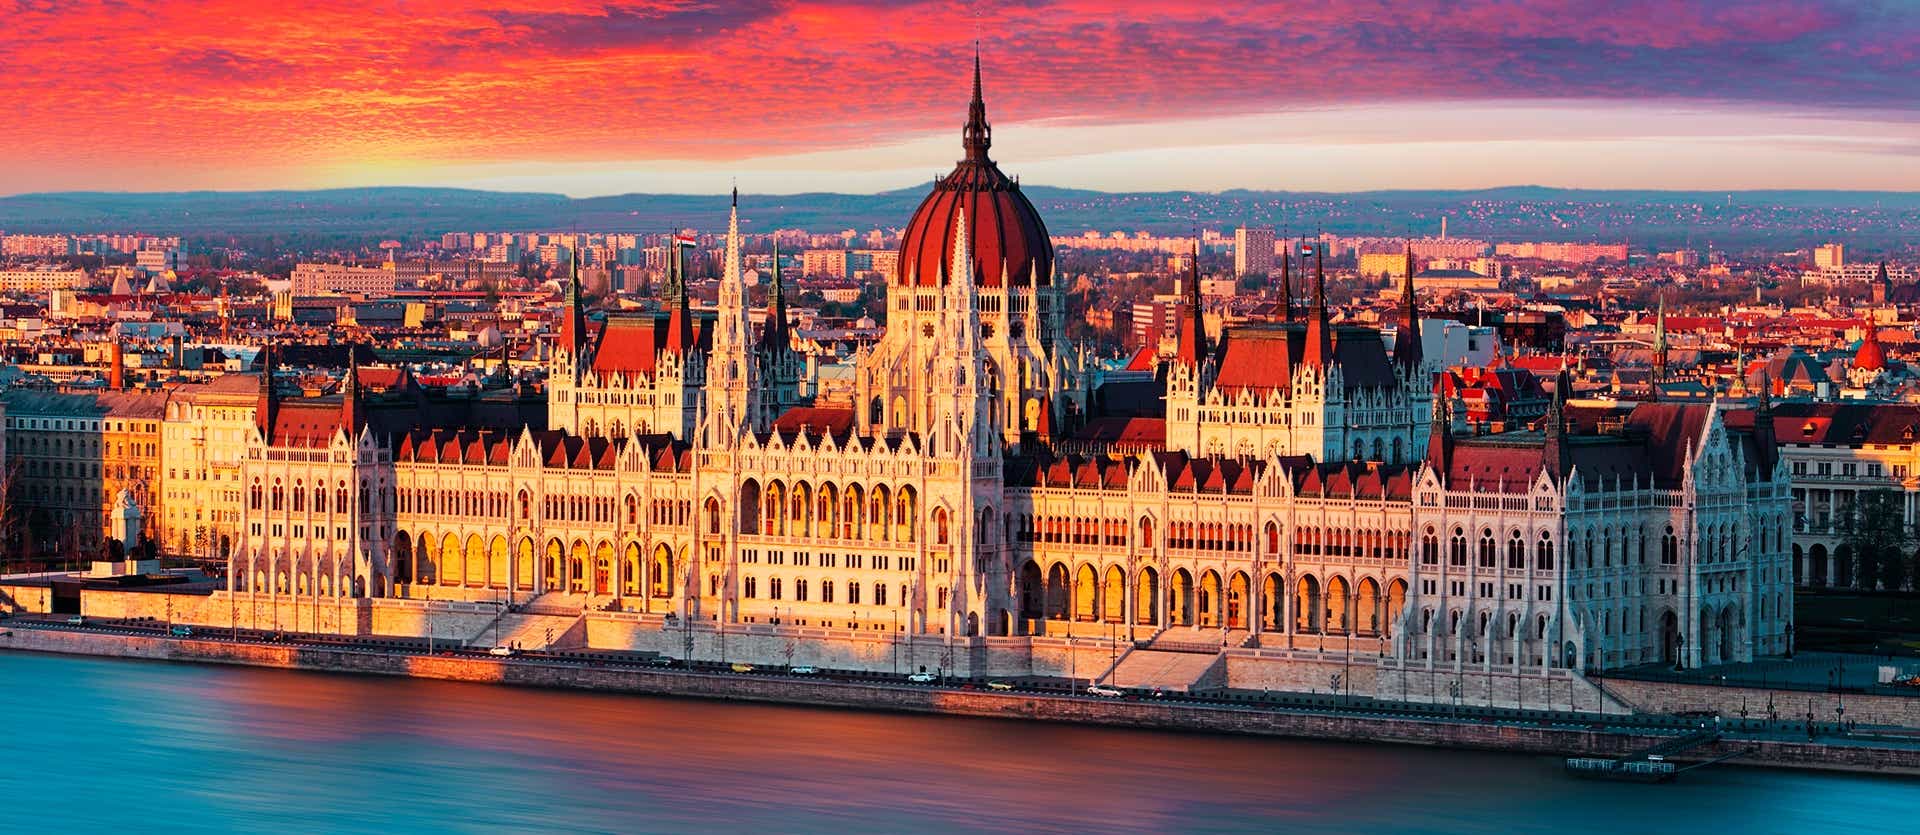 Edificio del Parlamento <span class="iconos separador"></span> Hungría